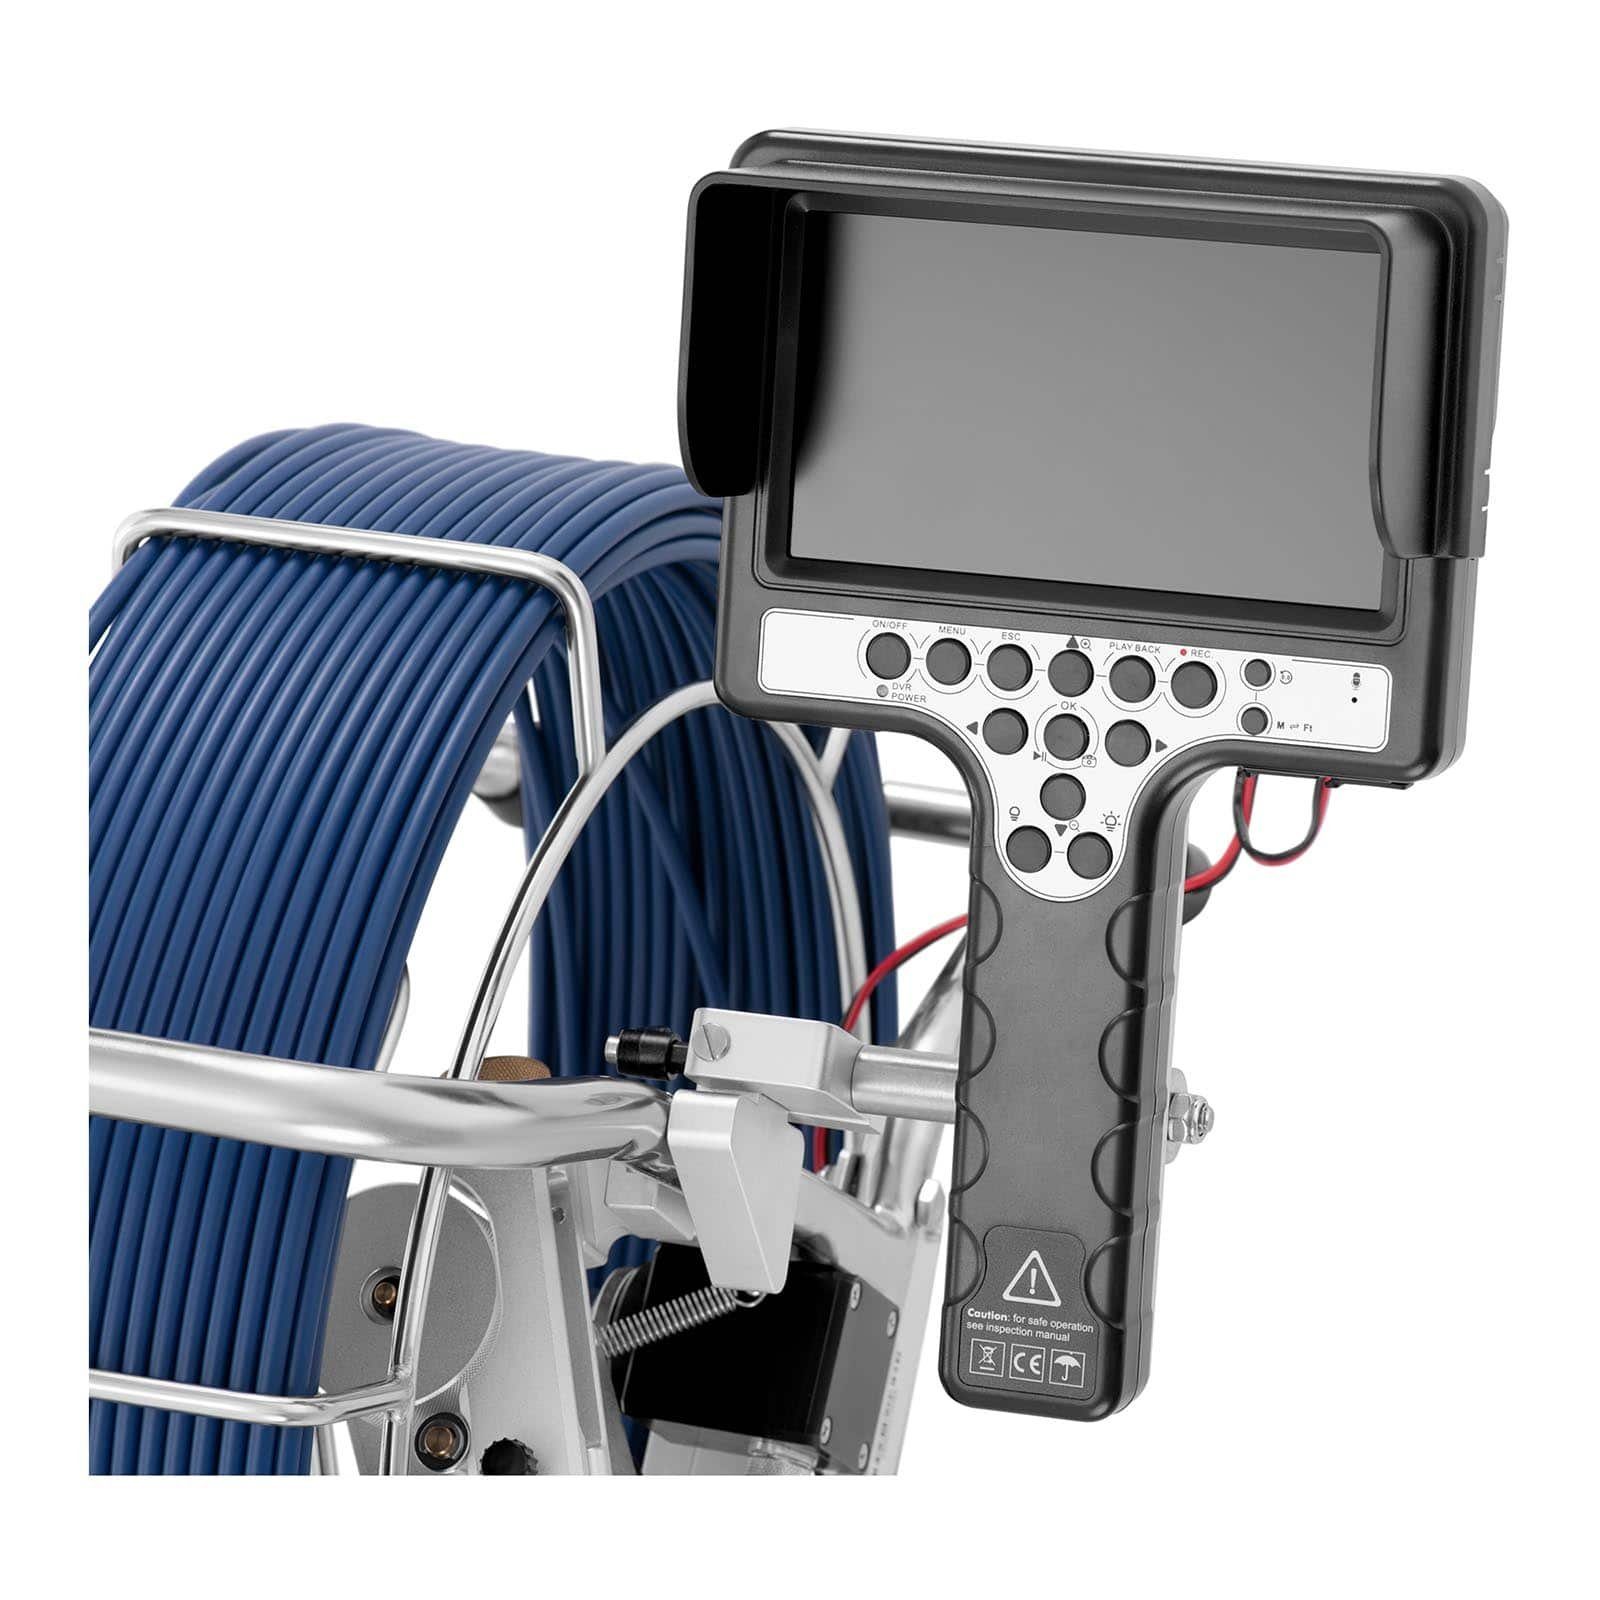 Inspektionskamera Systems Endoskop Steinberg Rohrkamera Inspektionskamera Abflusskamera Kamera Kanalkamera